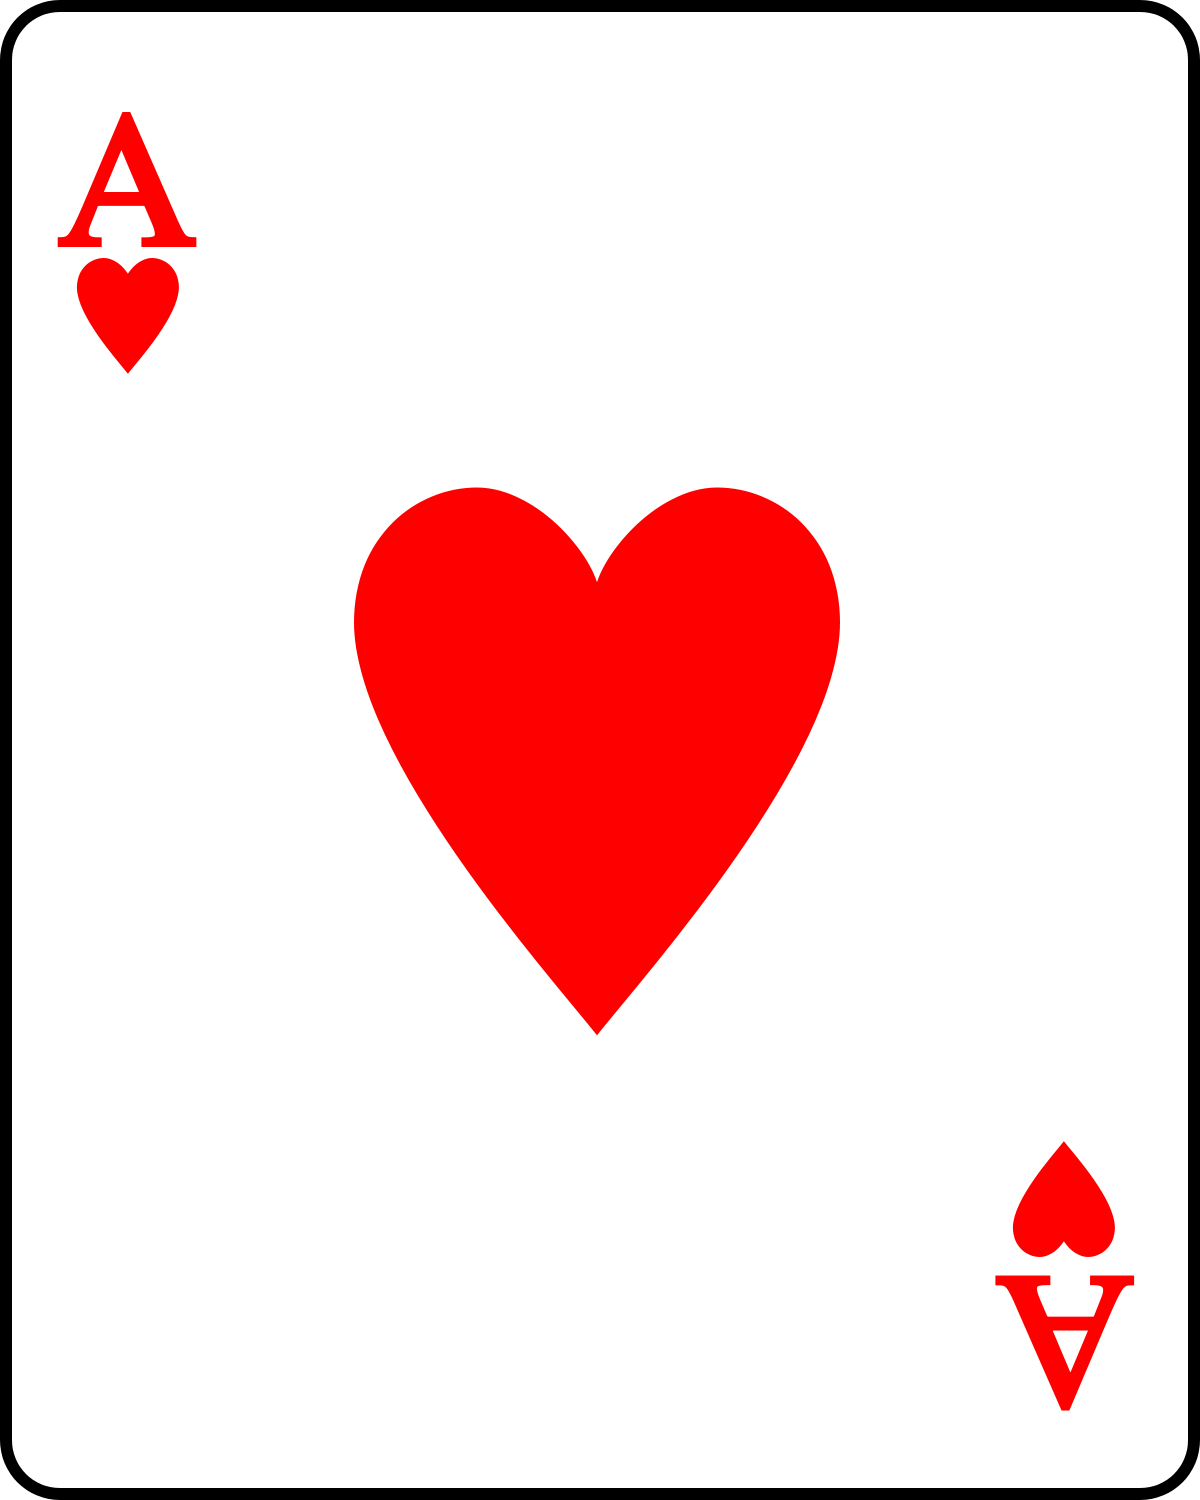 1 card